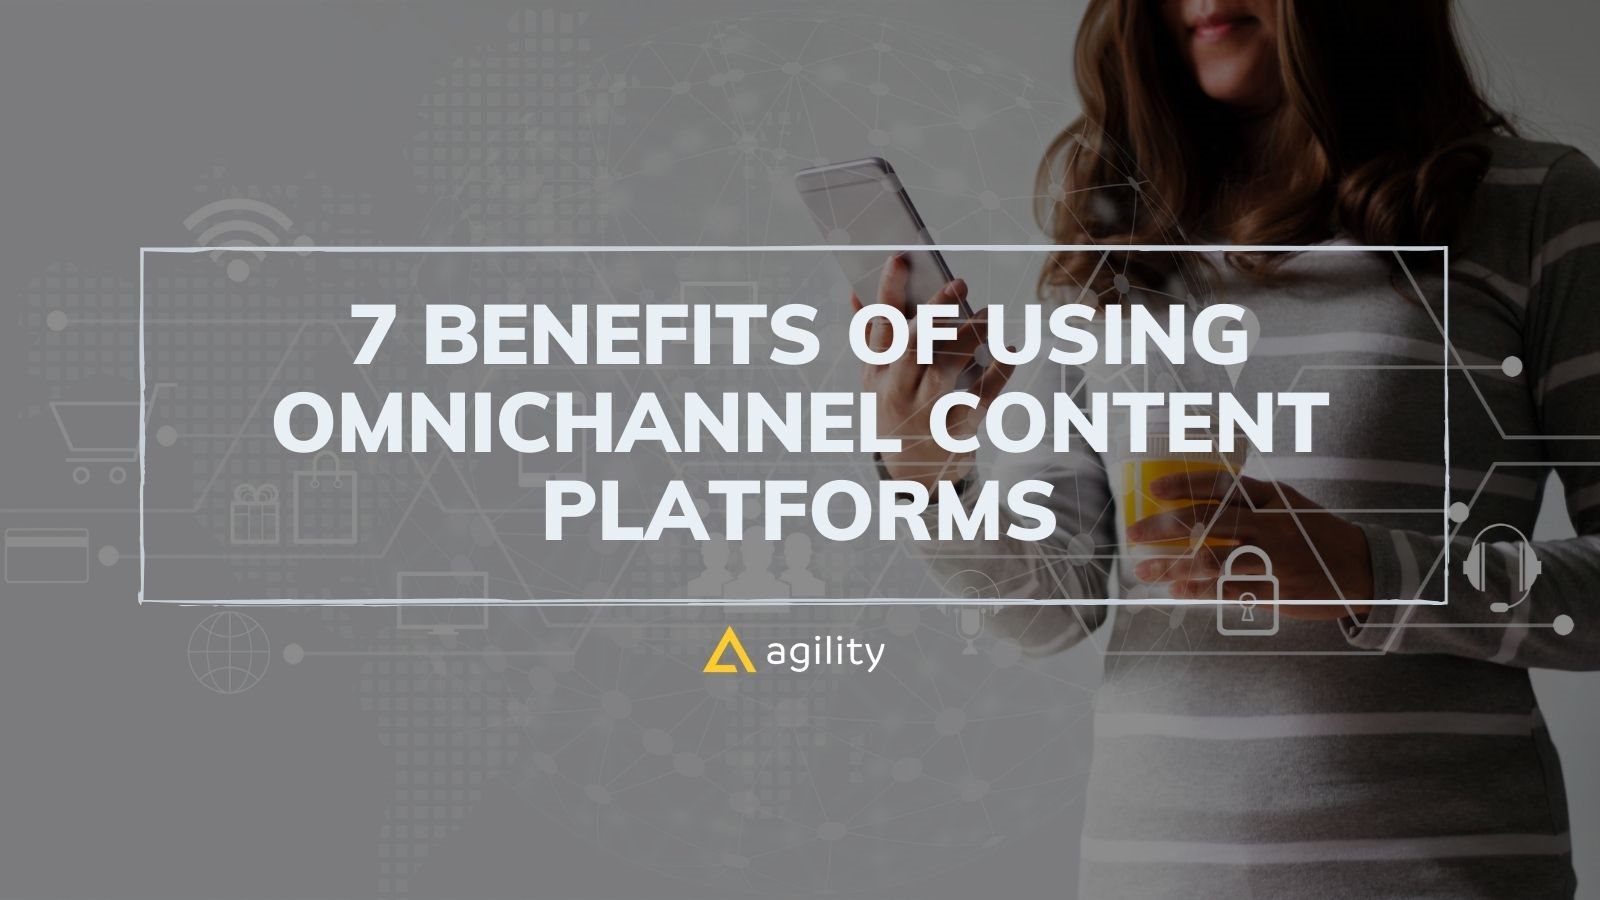 7 Benefits of Using Omnichannel Content Platforms